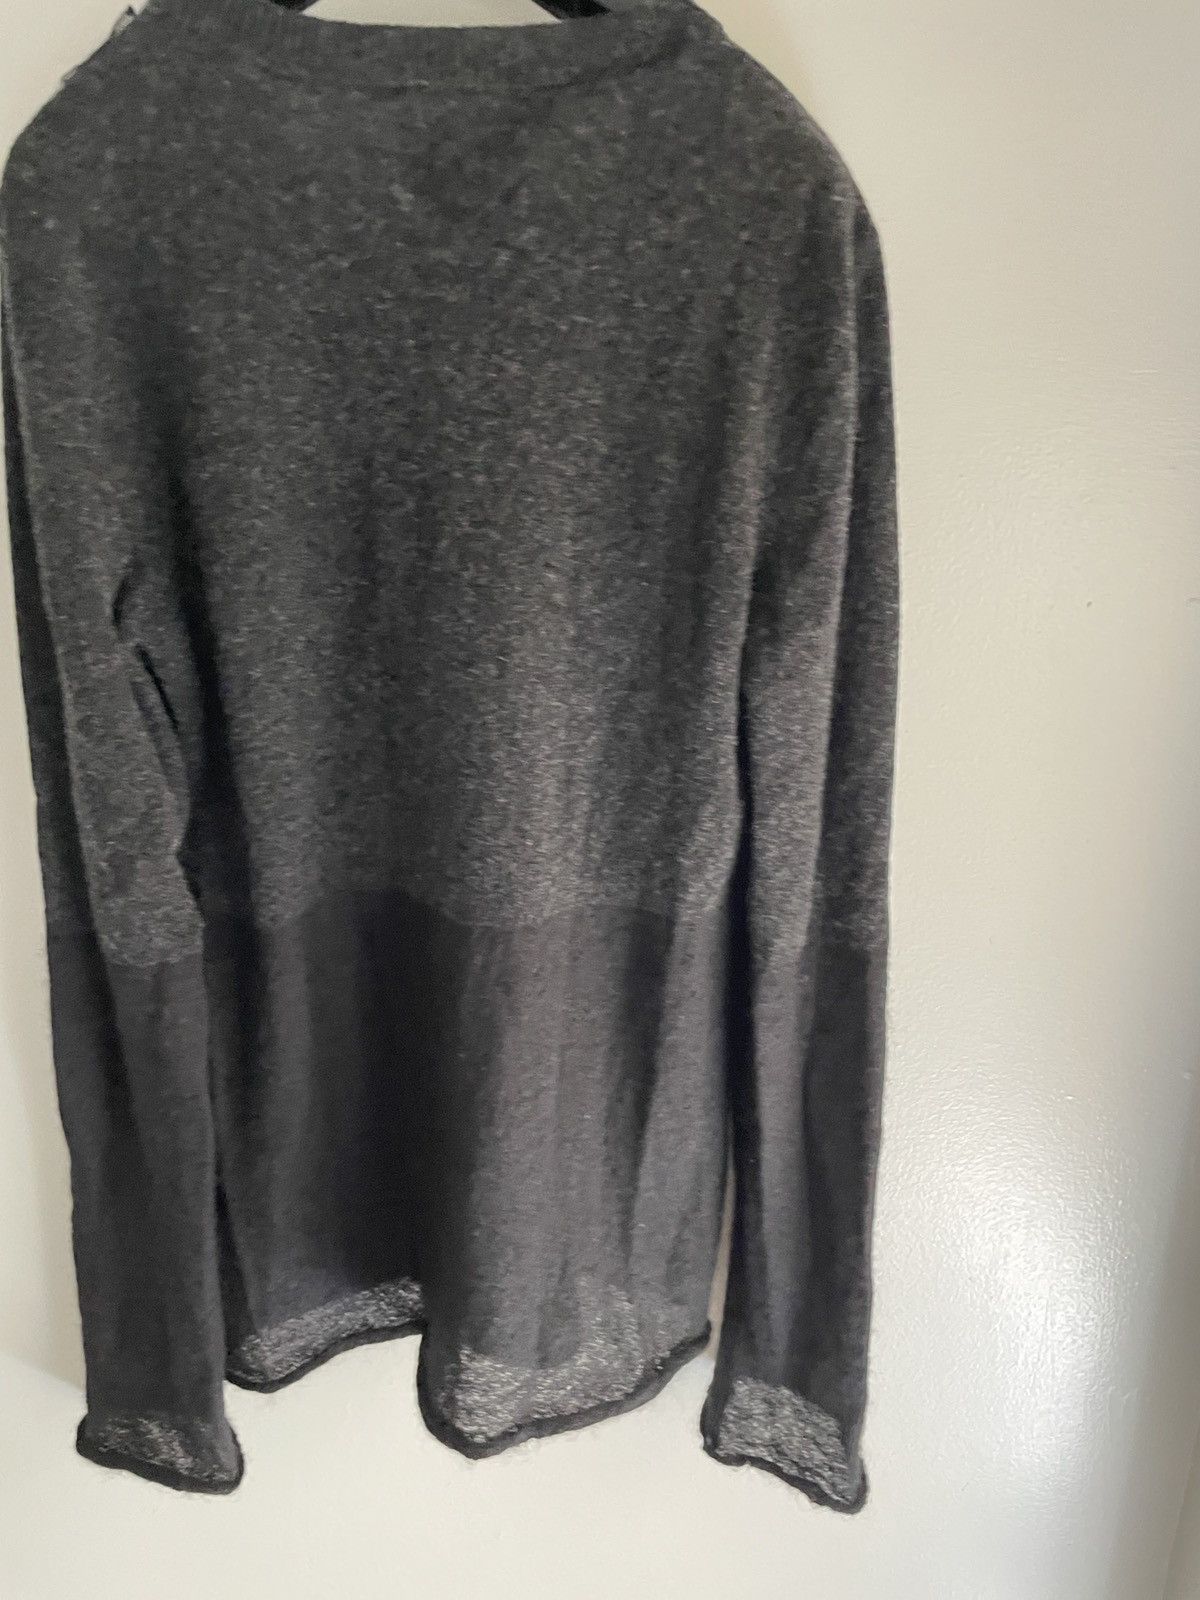 F/W06 Grunge Distressed Noir Knit Sweater - 6